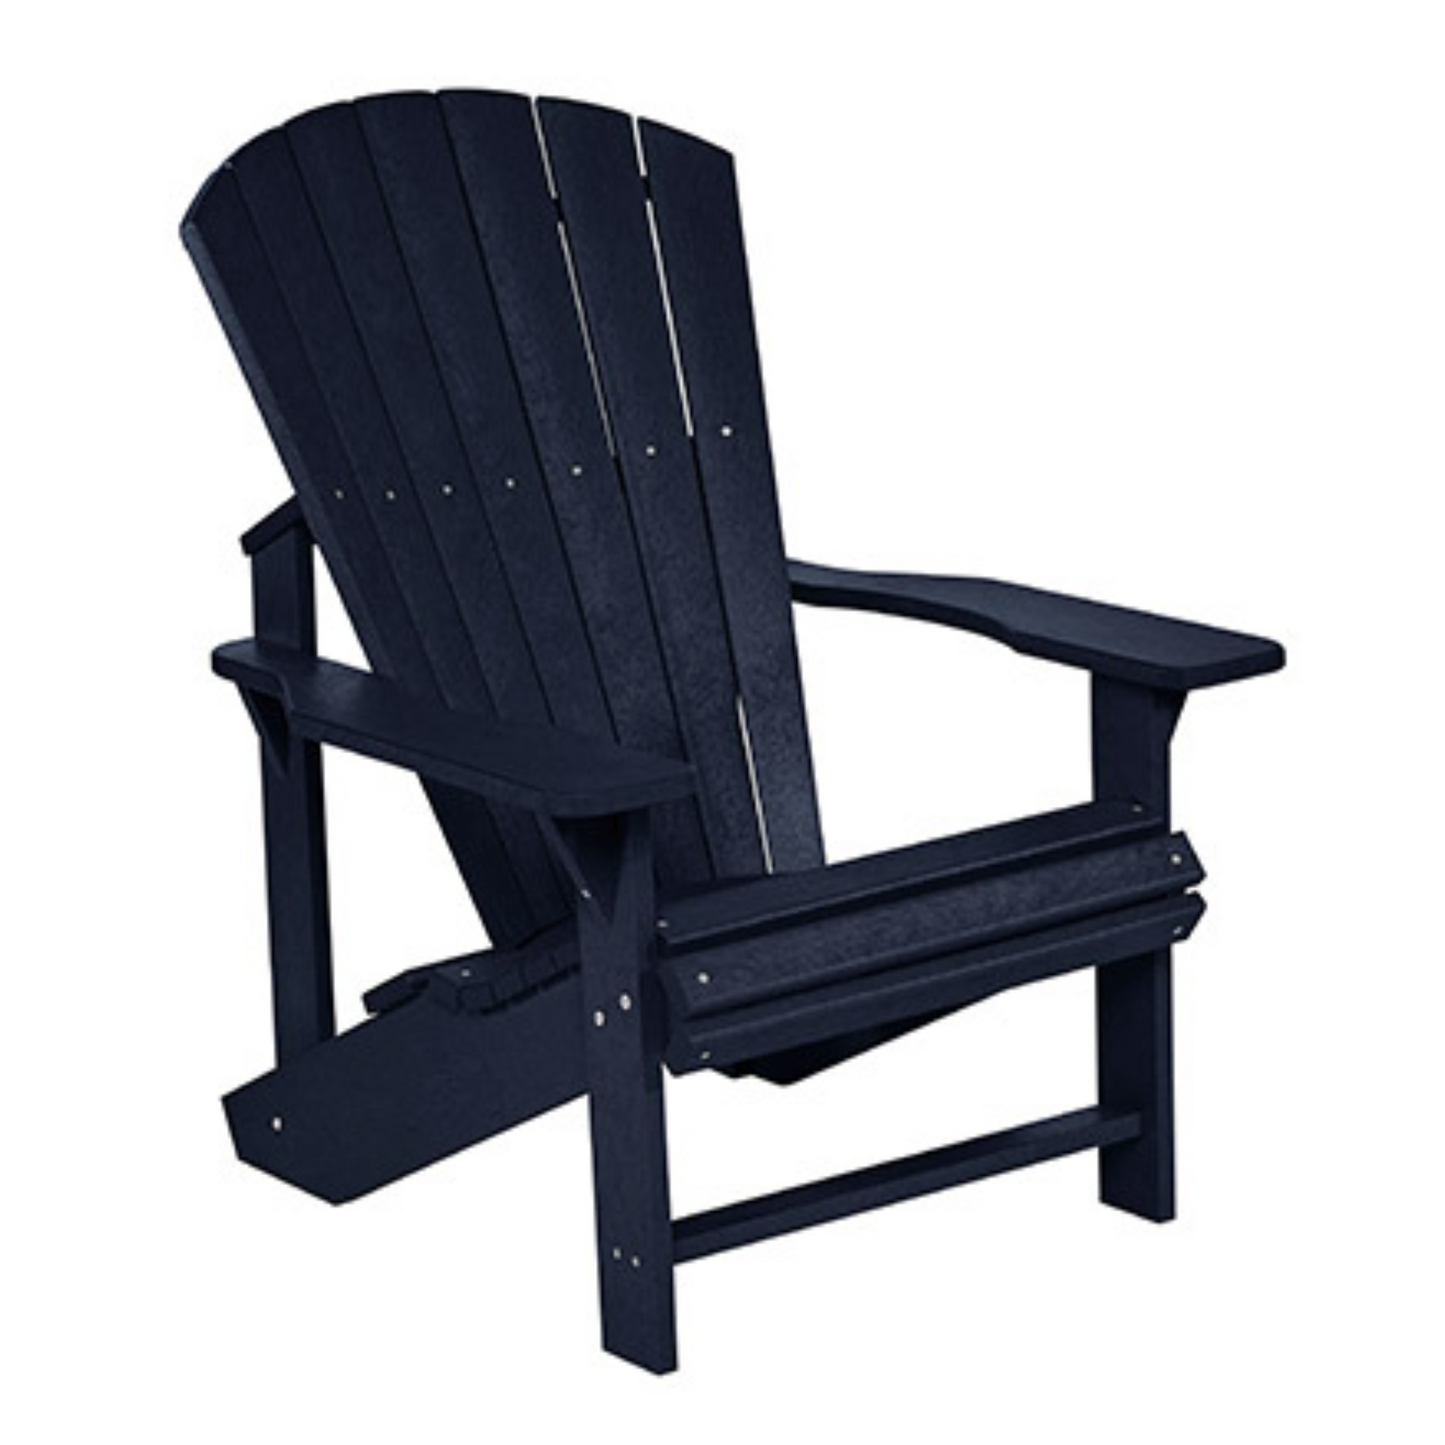 C.R.P. Upright Adirondack Chair In Black